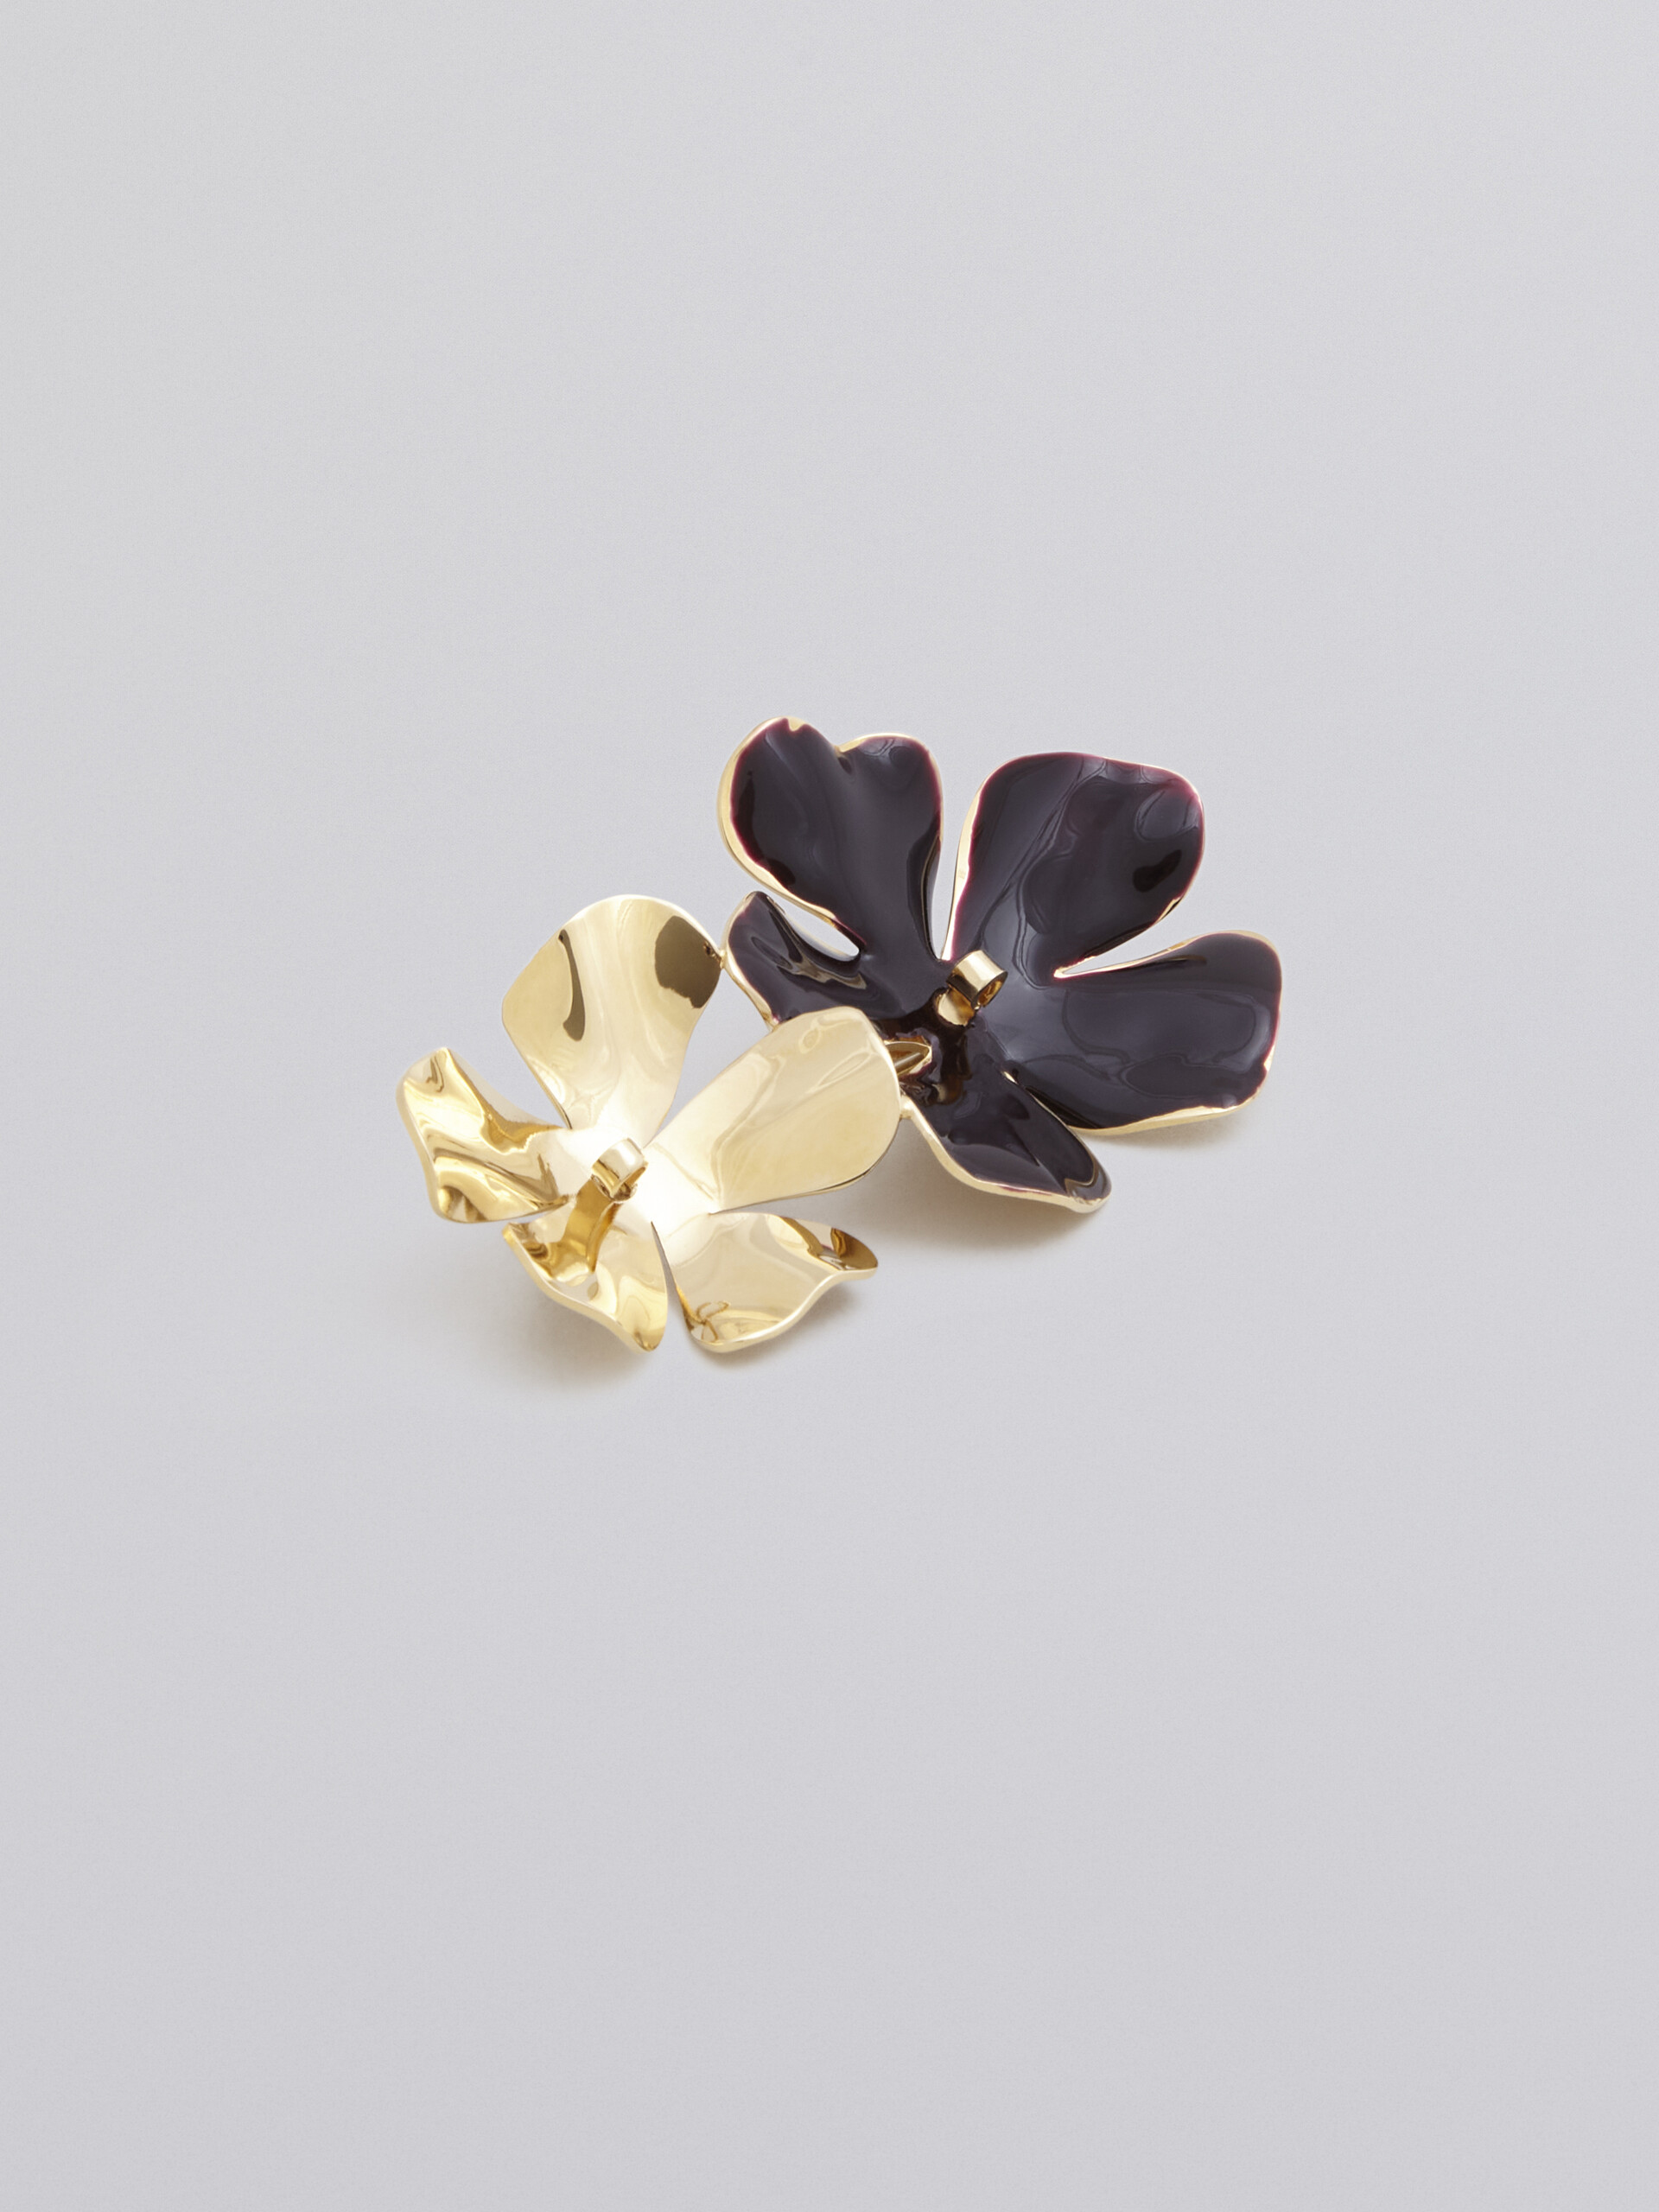 Brass FLOWER brooch in the shape of a flower with enamel petals - Broach - Image 3